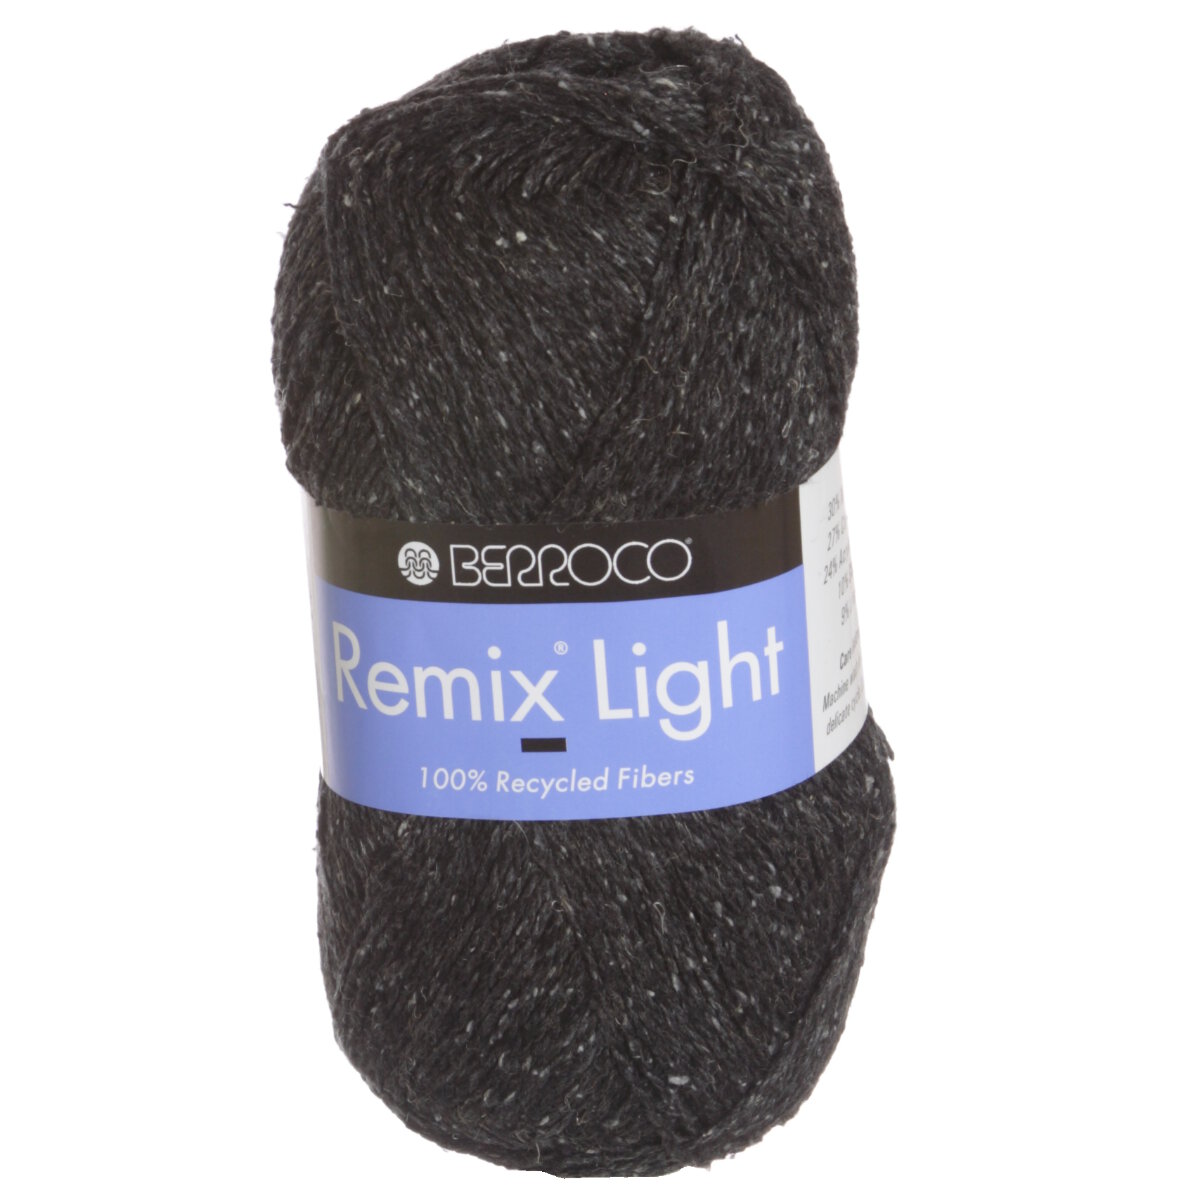 Berroco Remix Light Yarn - 6993 Pepper at Jimmy Beans Wool